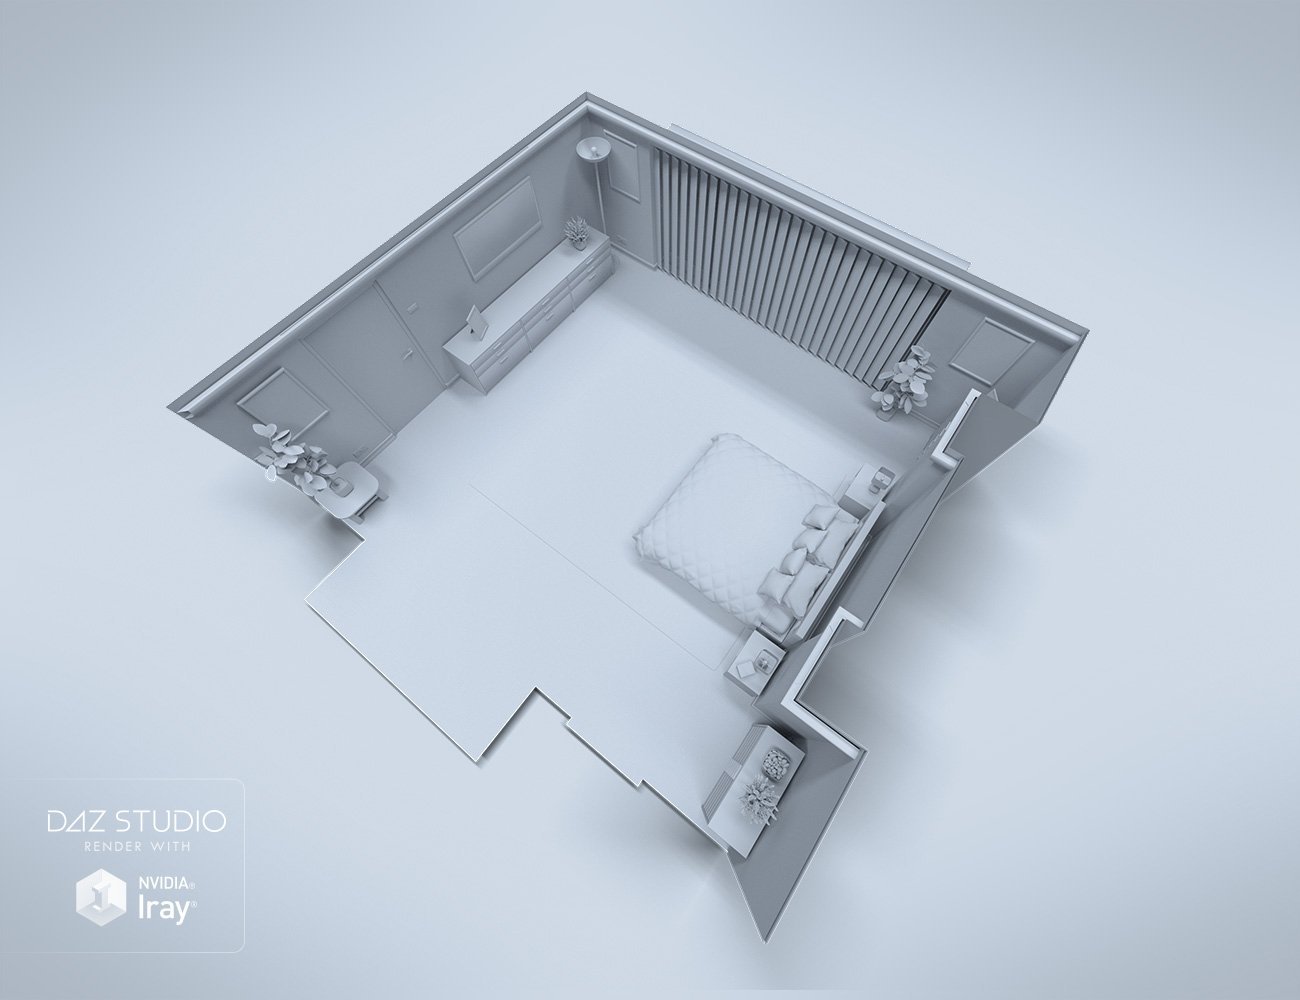 Granite Bedroom by: Predatron, 3D Models by Daz 3D